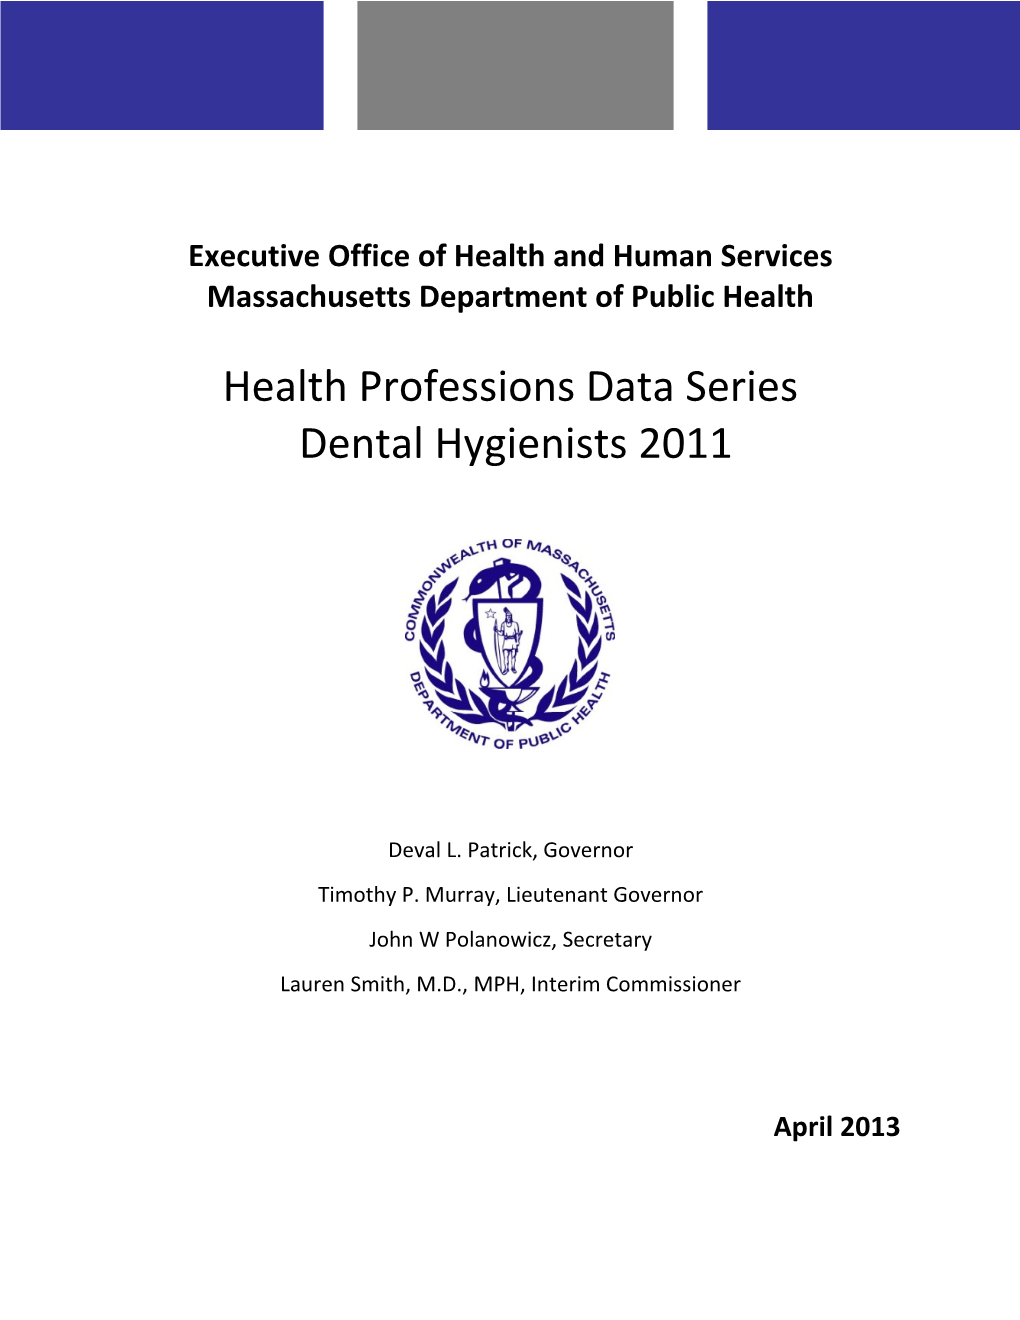 Health Professions Data Series: Dental Hygienists 2011